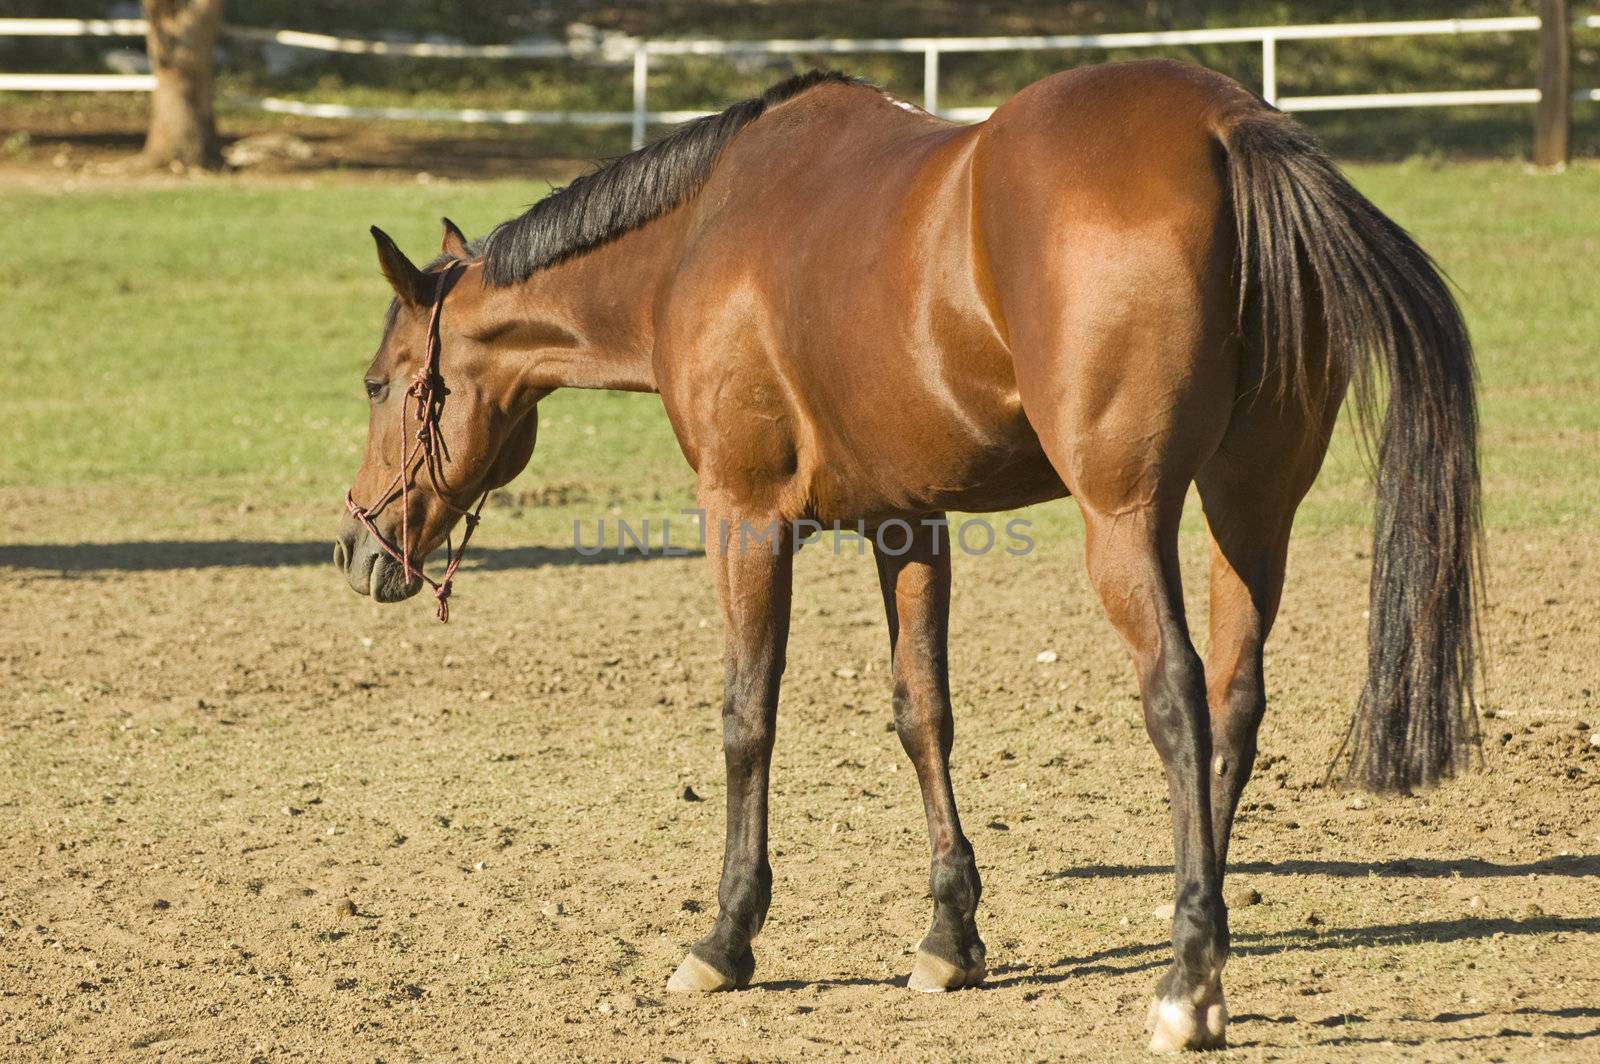 A brown horse walks in a enclosure